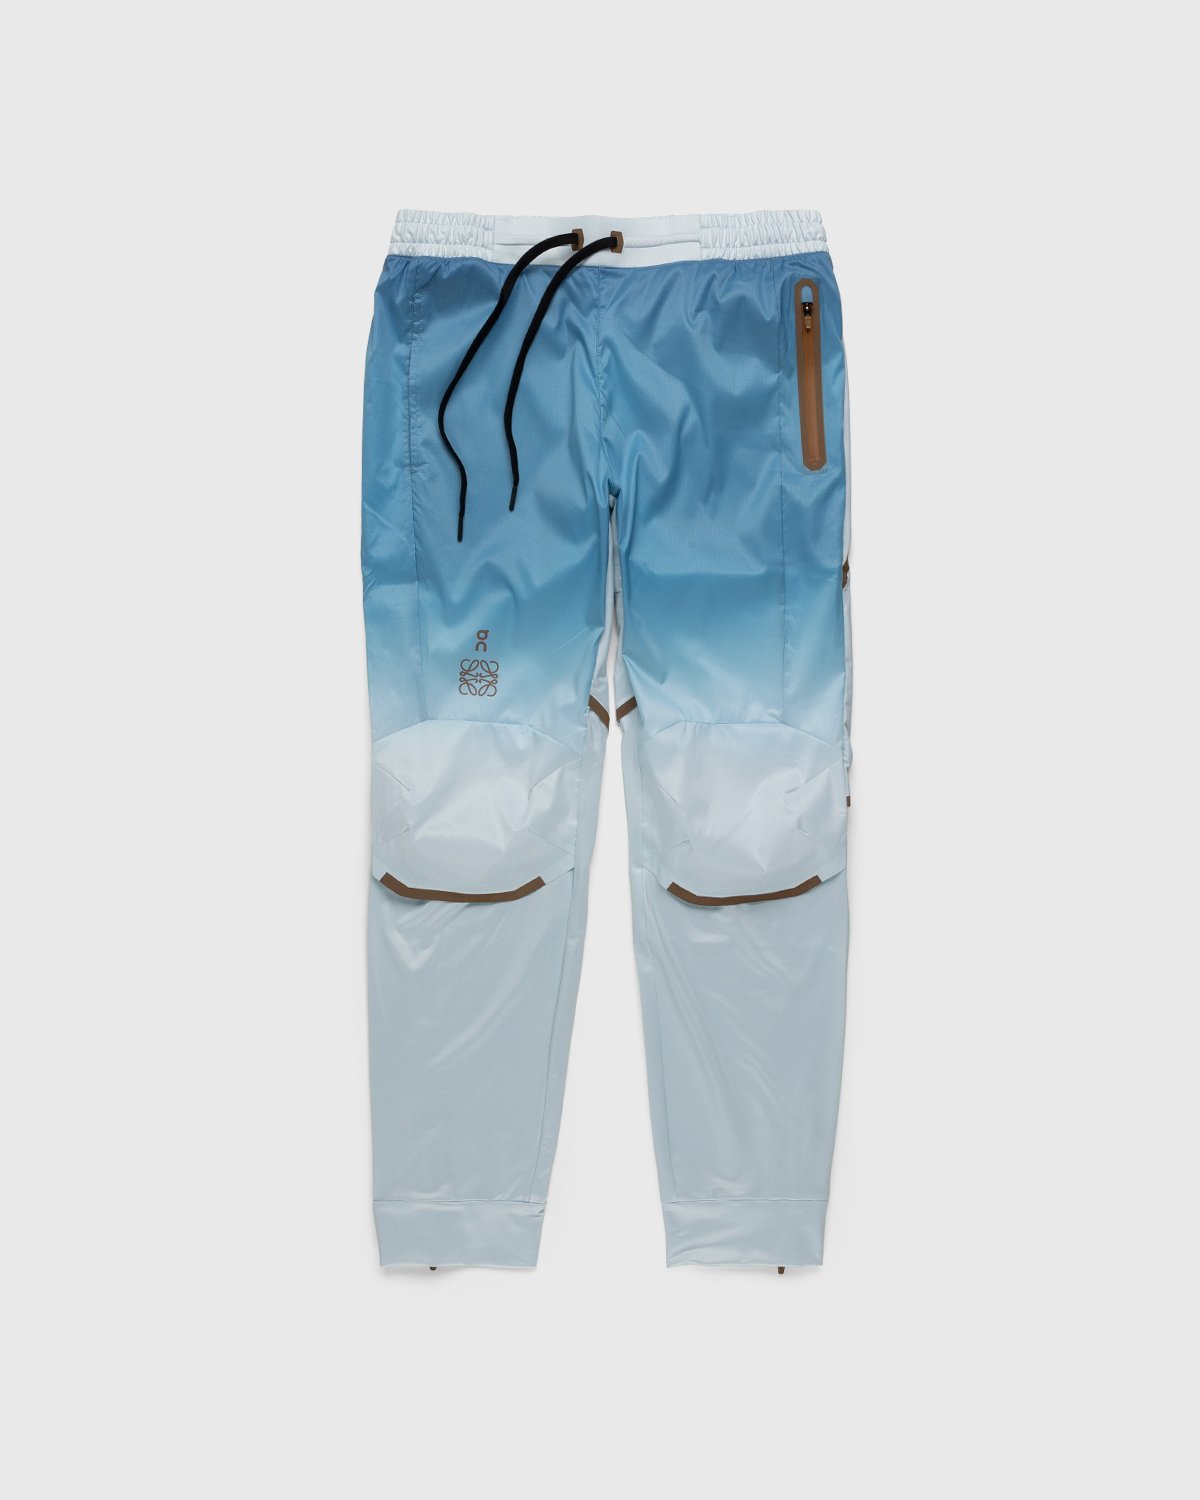 Loewe x On - Men's Technical Running Pants Gradient Grey - Clothing - Blue - Image 1